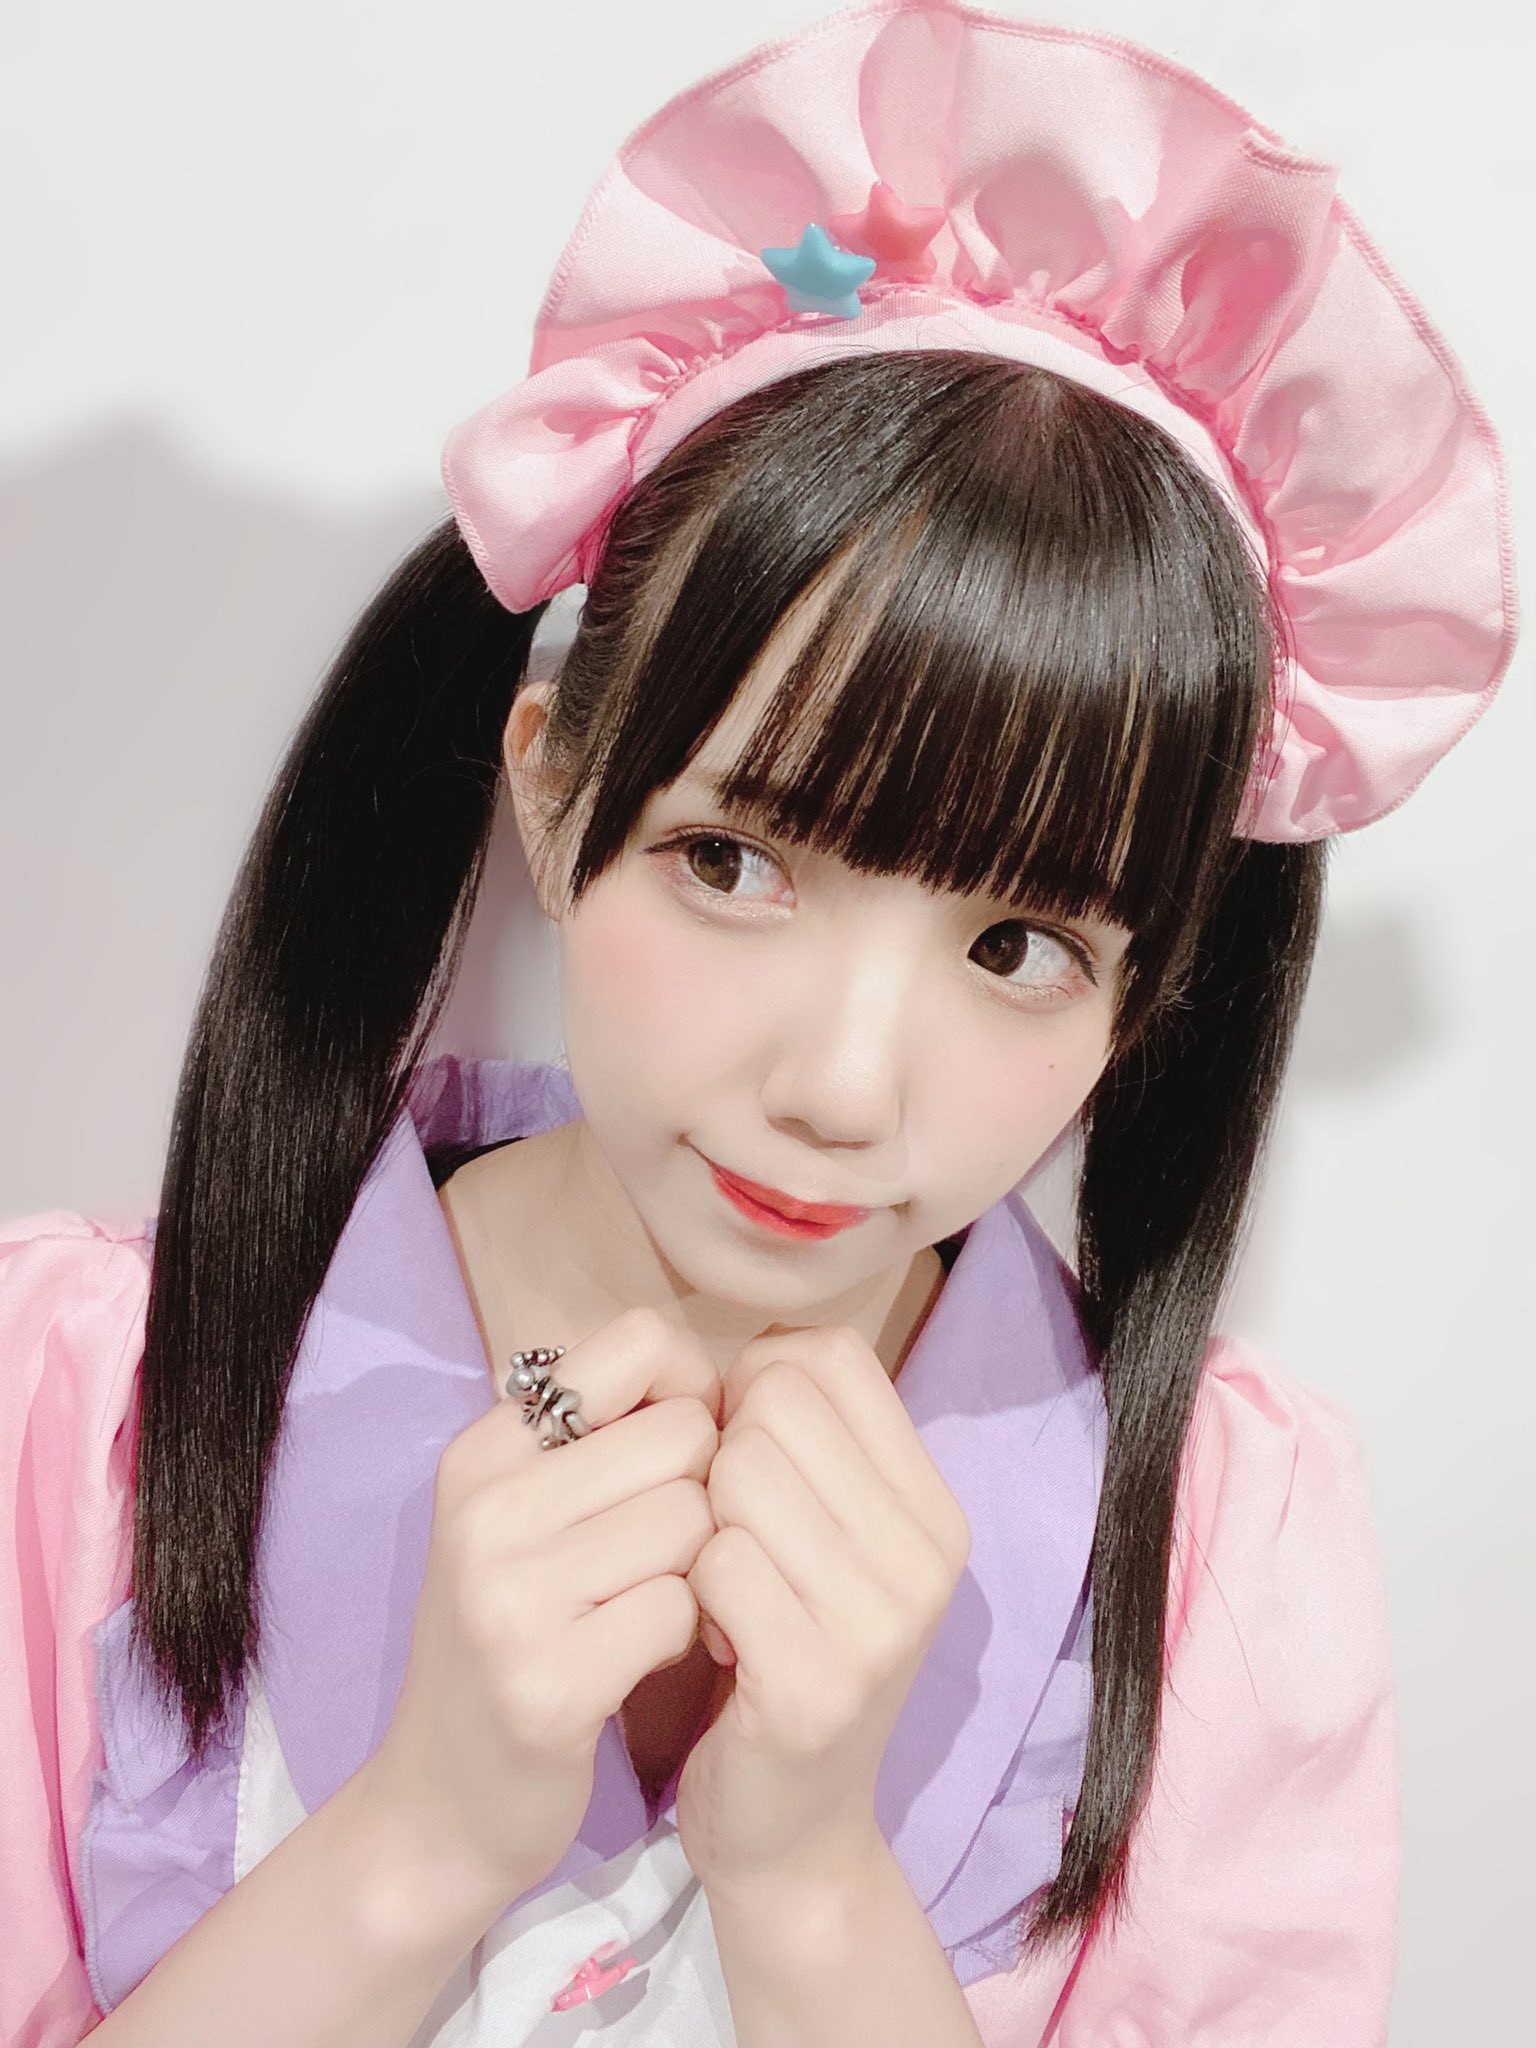 A-Pop Idols | Tachibana Haruka